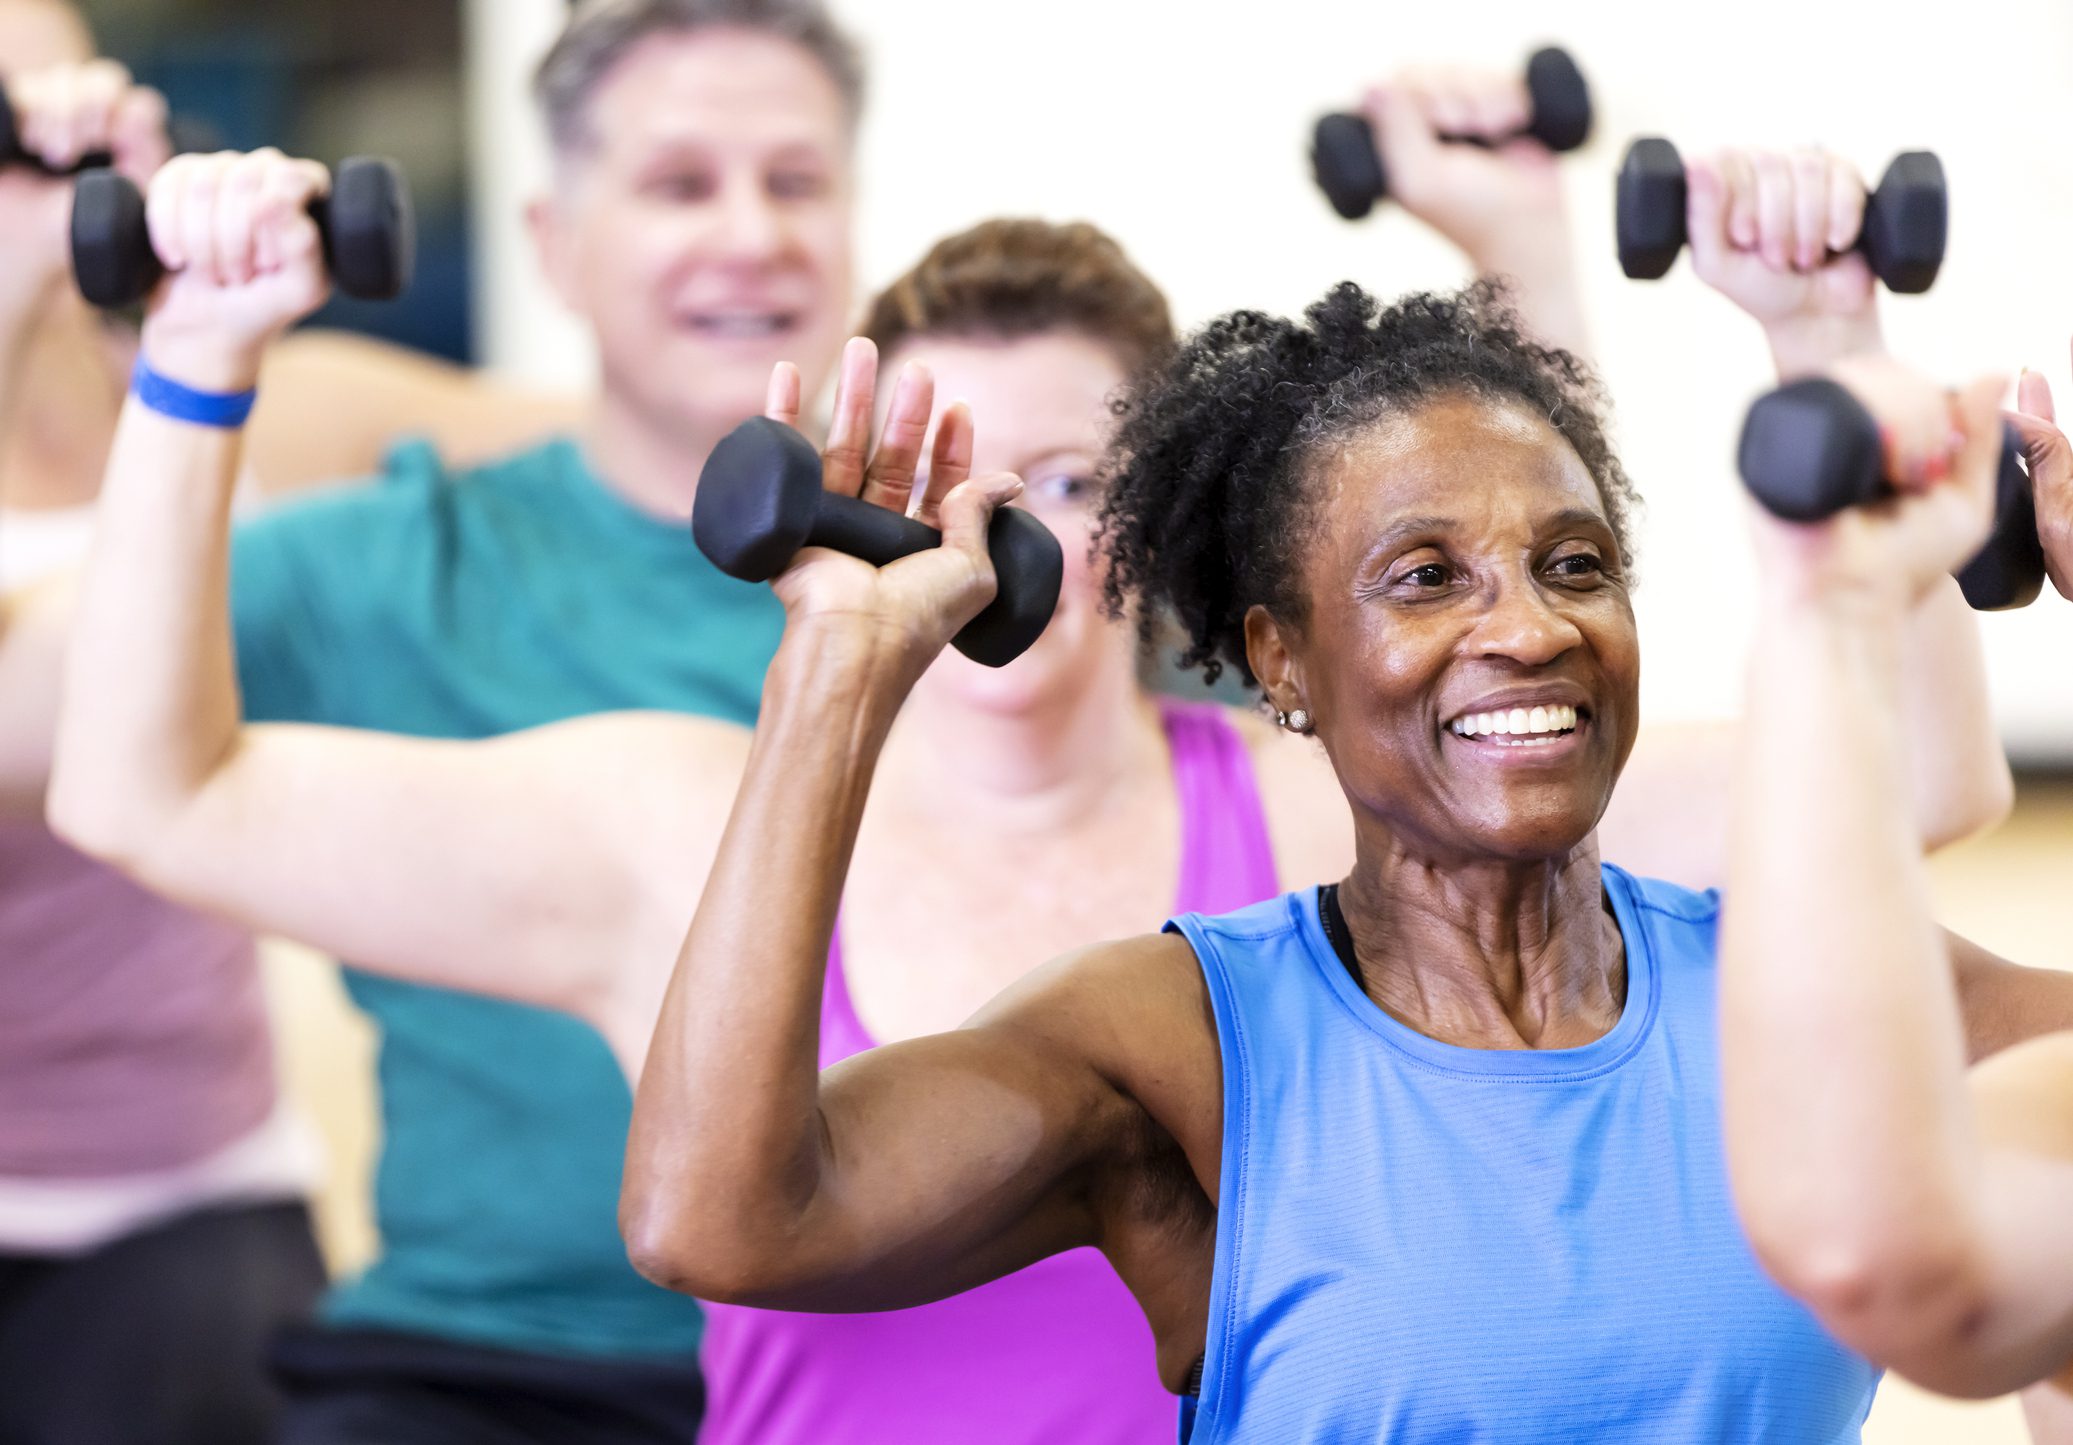 5 Strength Training Exercises for Seniors - SilverSneakers